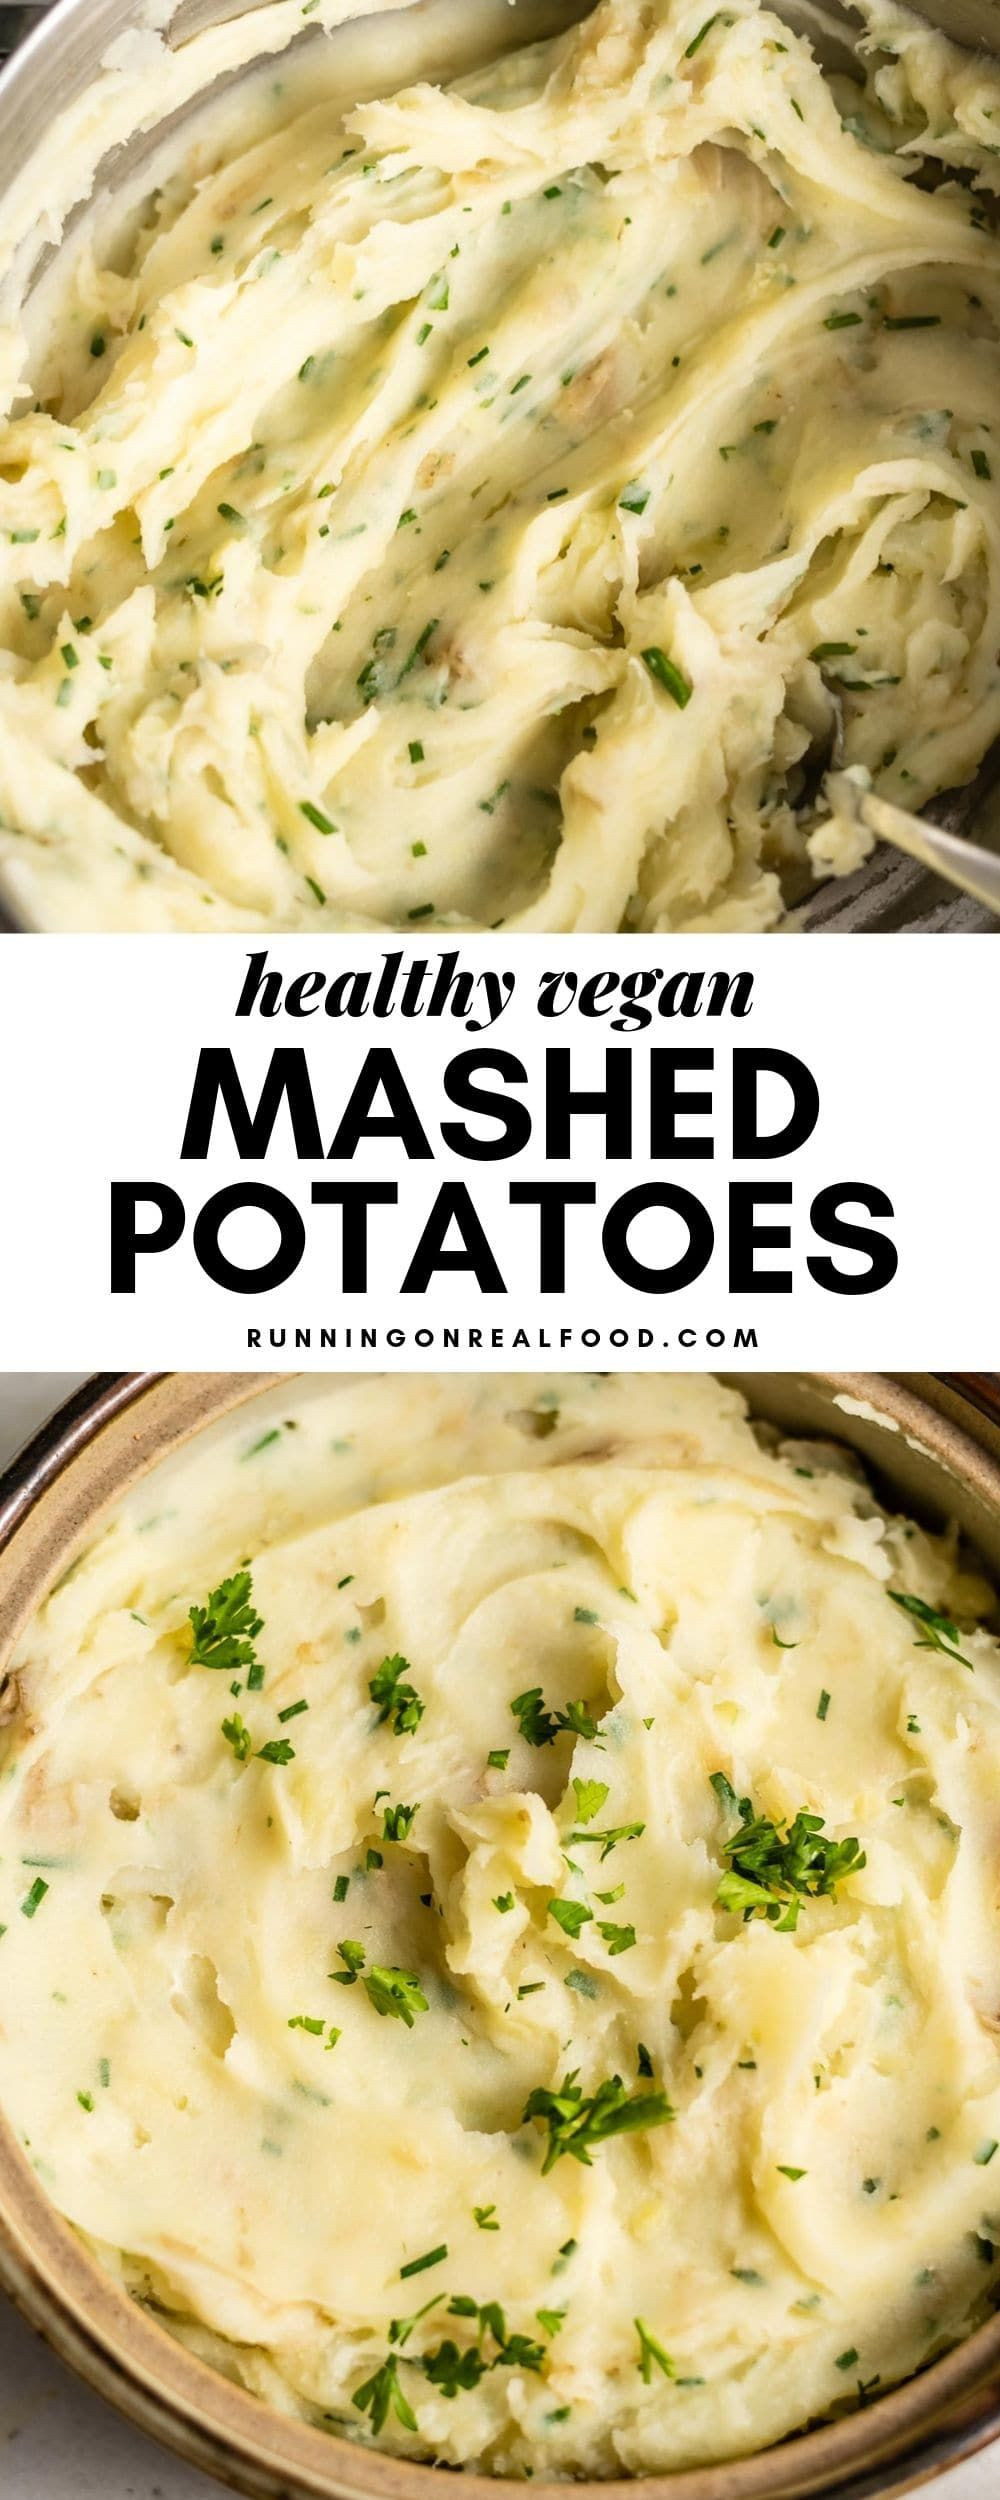 Vegan Mashed Potatoes Recipes
 Healthy Vegan Mashed Potatoes Recipe